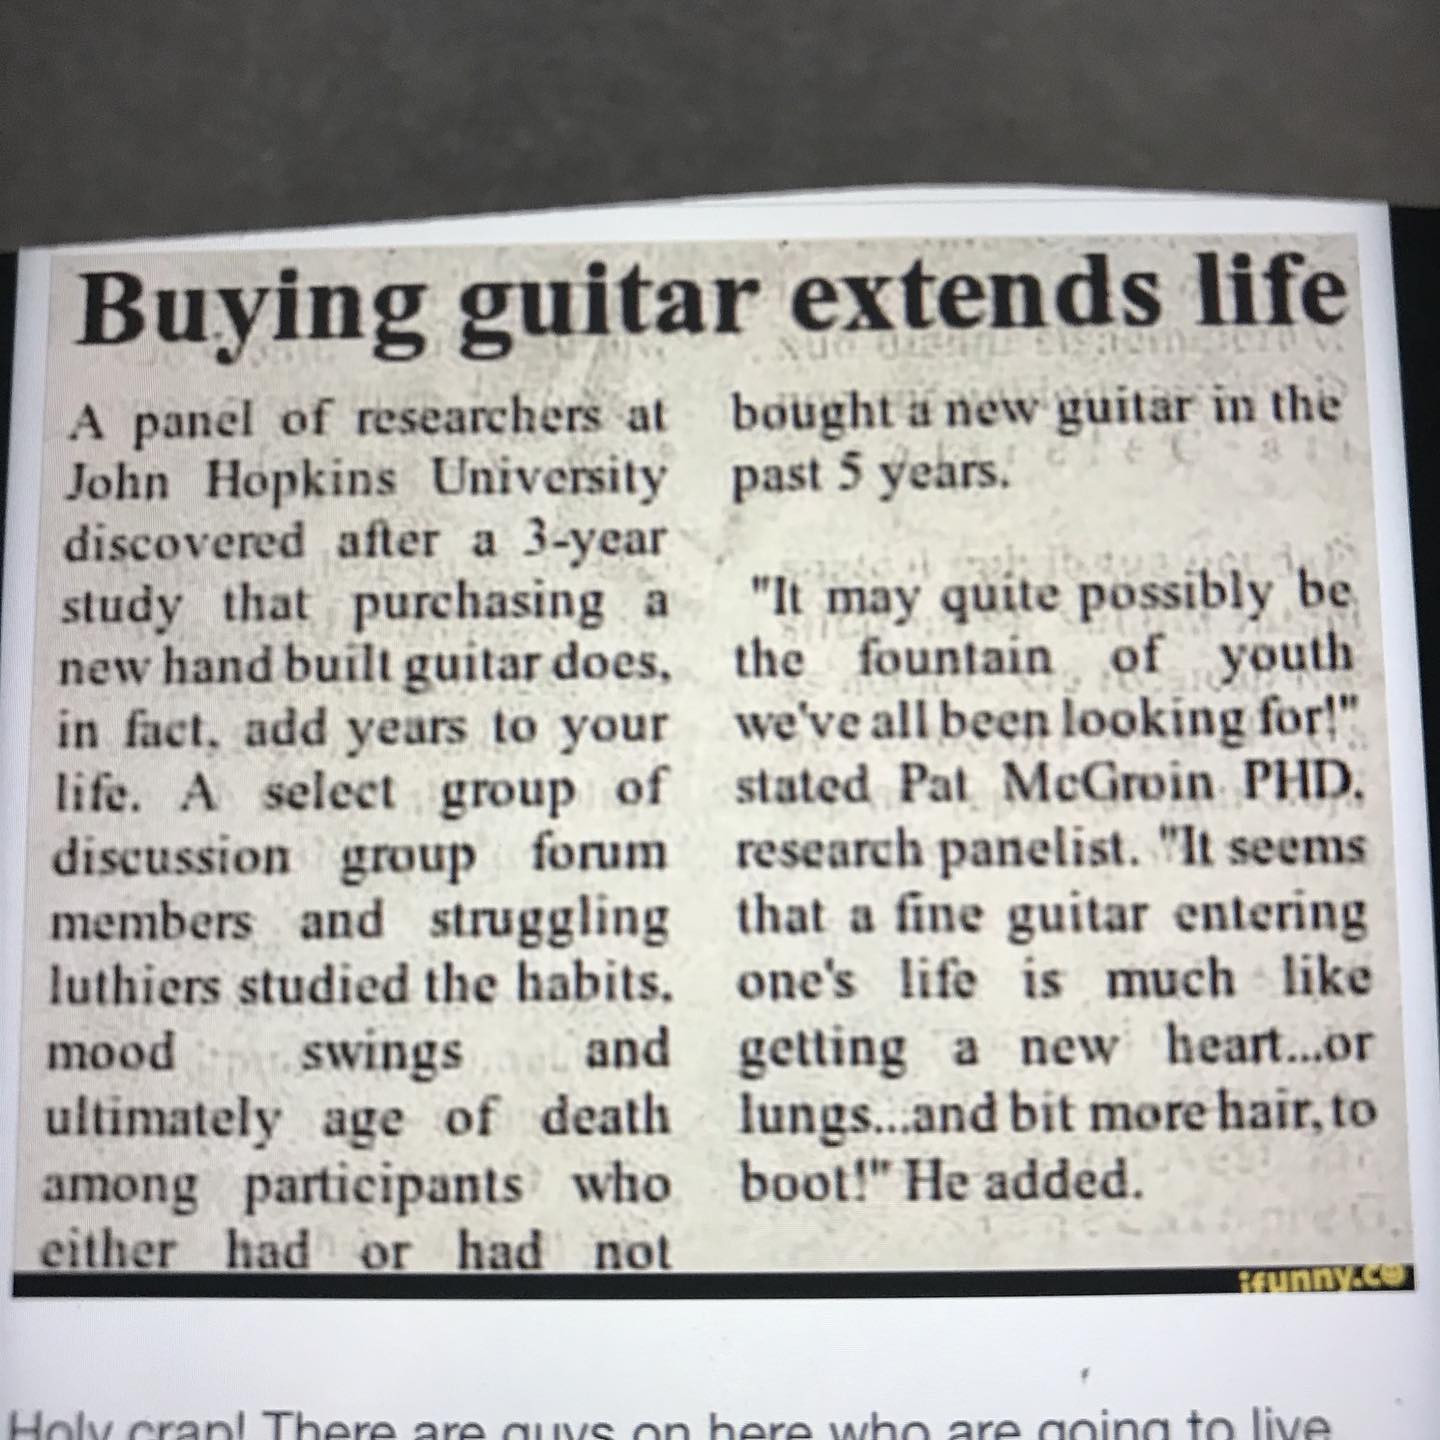 Buying-a-guitar-extends-life.jpg